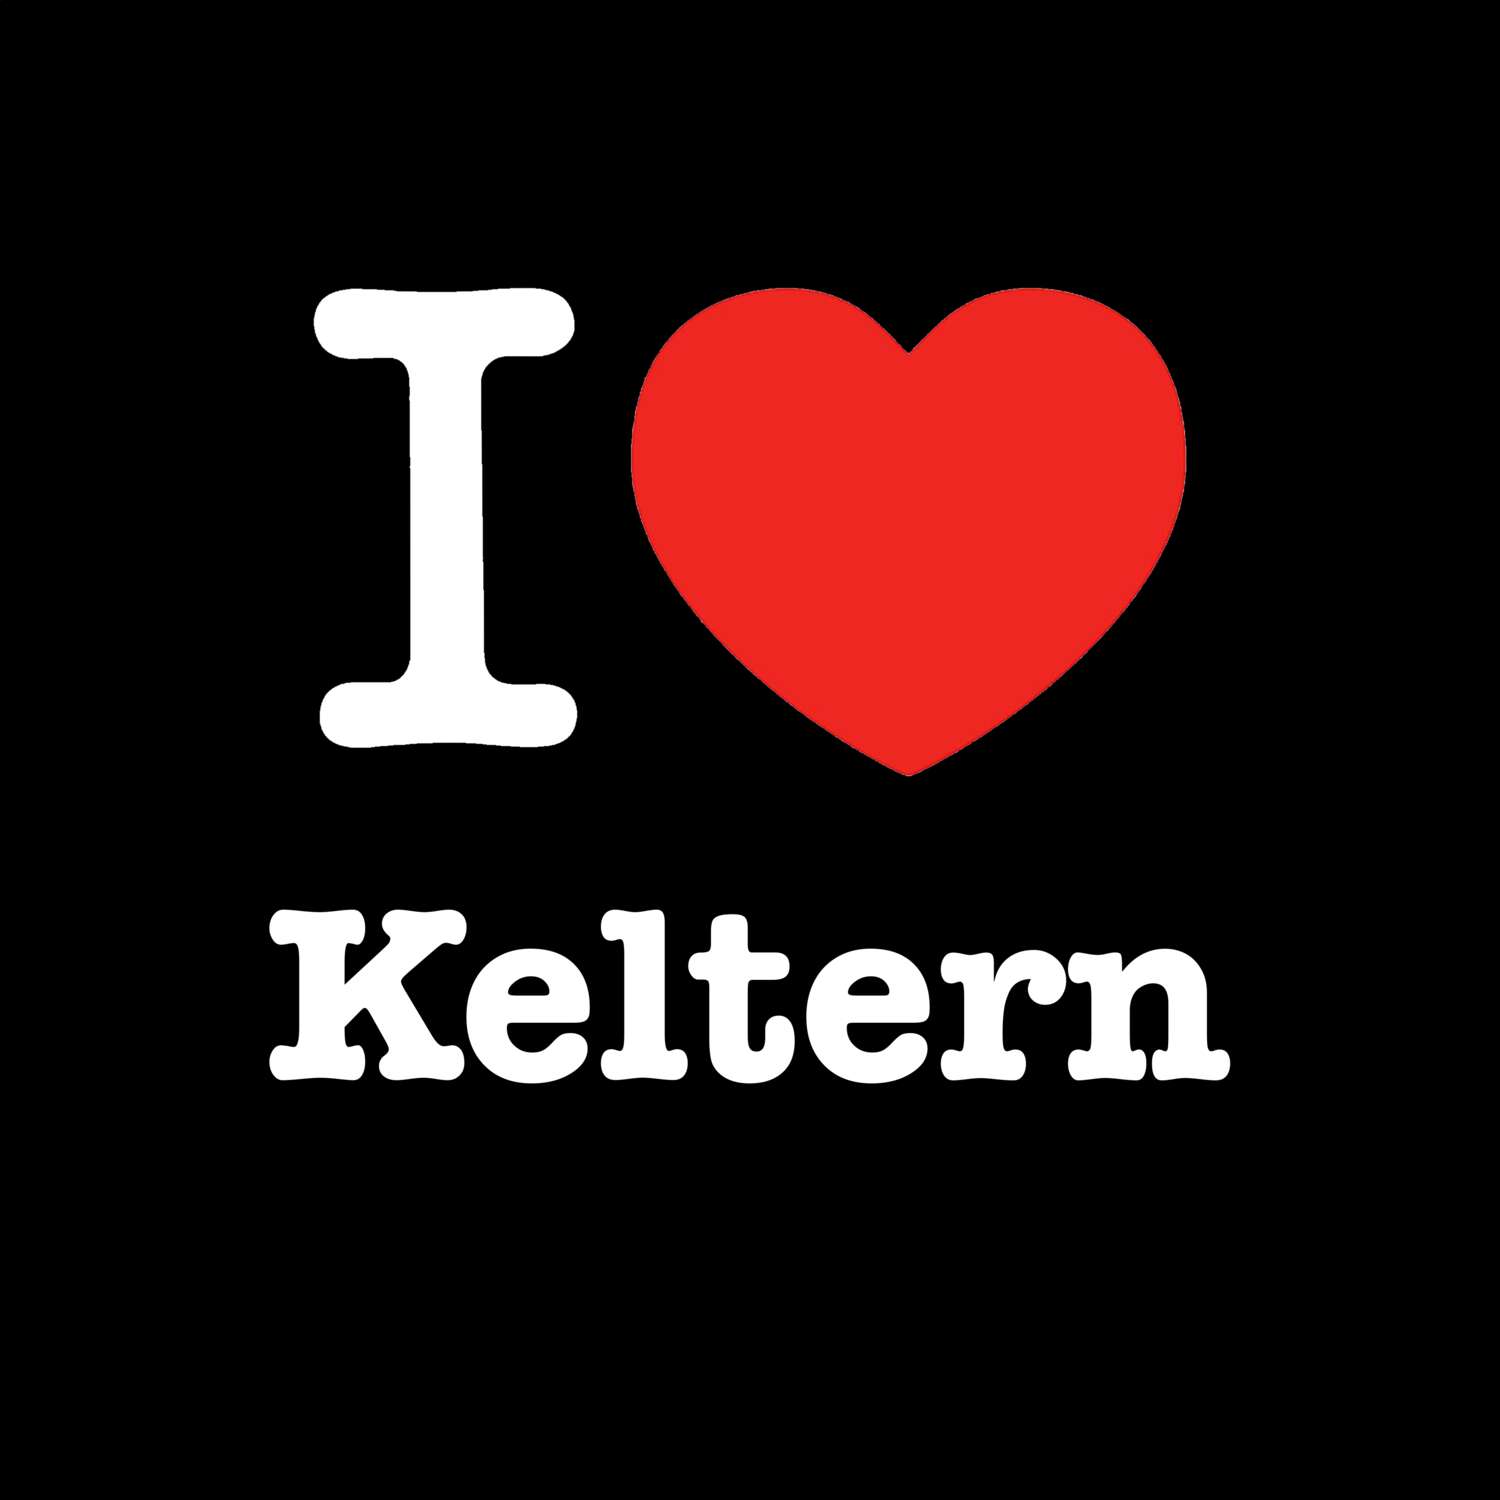 Keltern T-Shirt »I love«